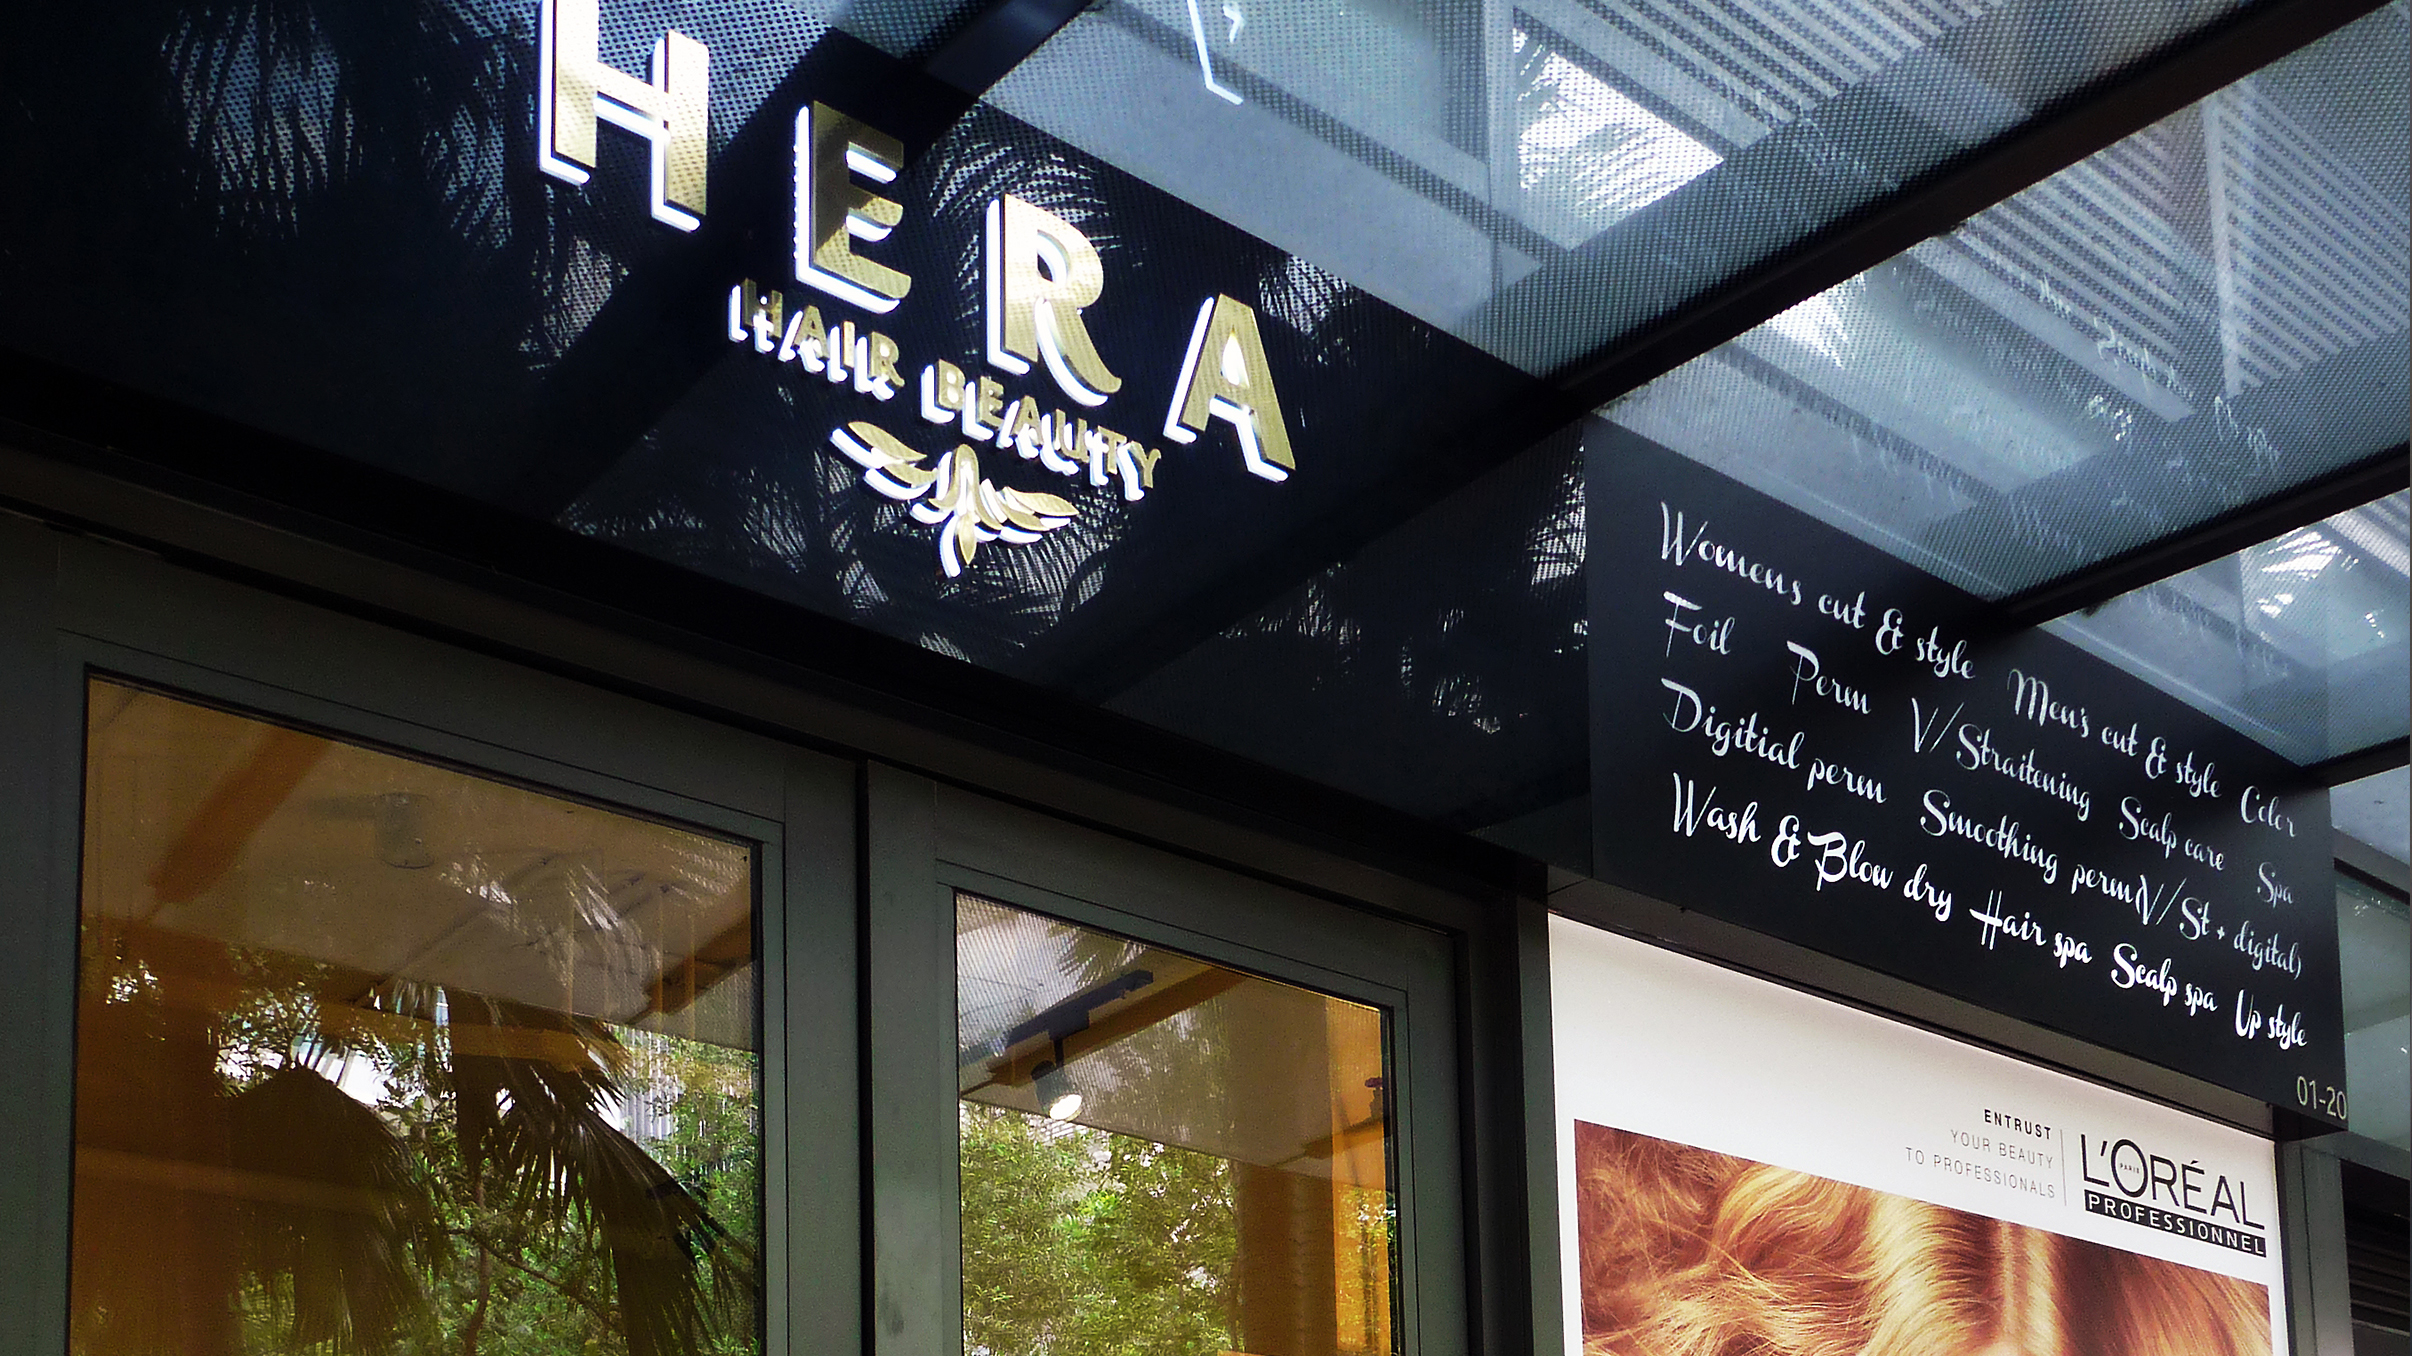 Hera Beauty Salon storefront